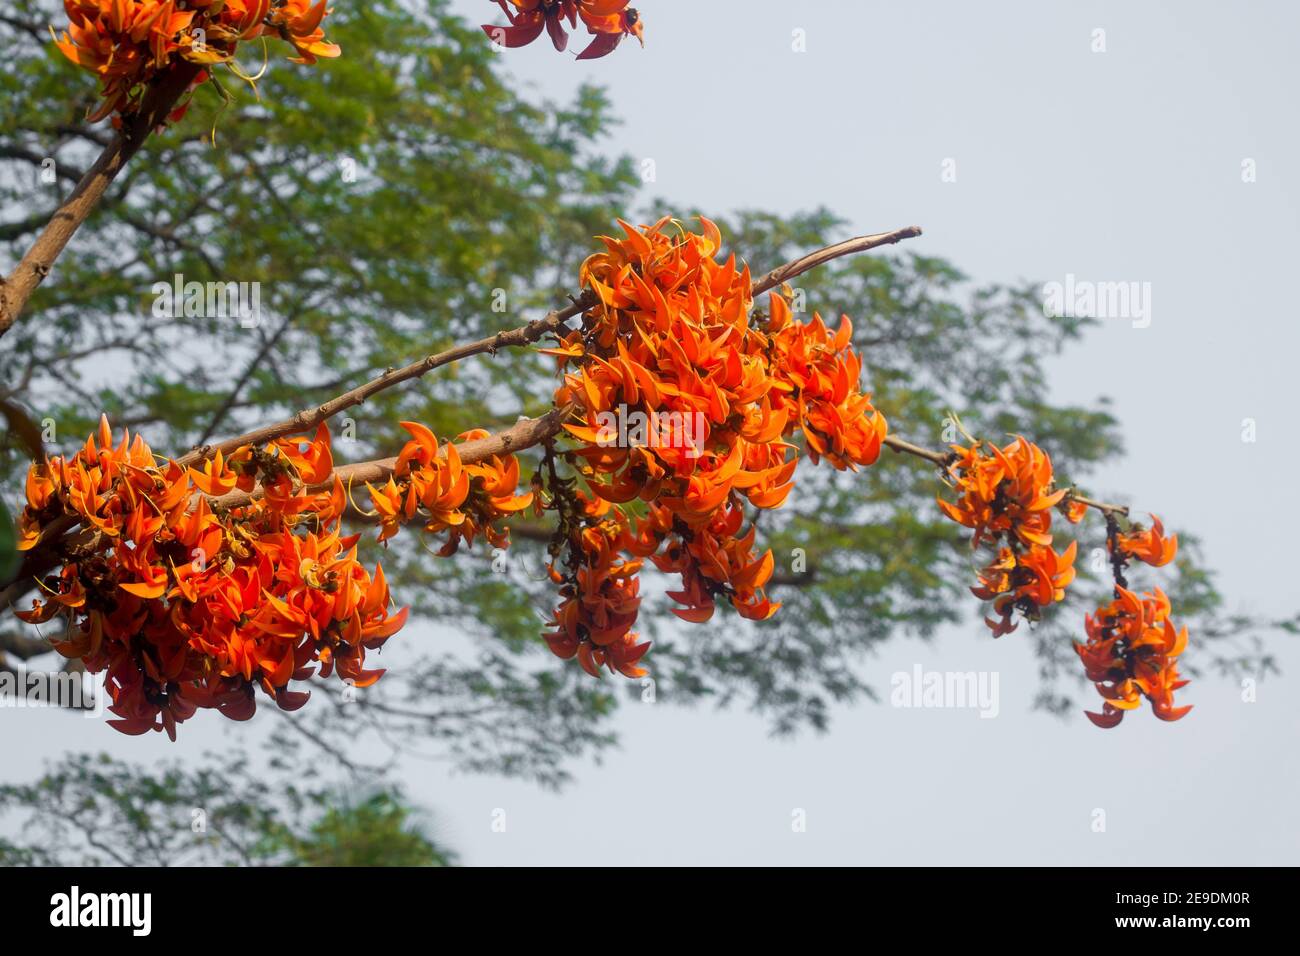 The beautiful reddish-orange Butea monosperma flower blooms in nature in a tree in the garden. Stock Photo